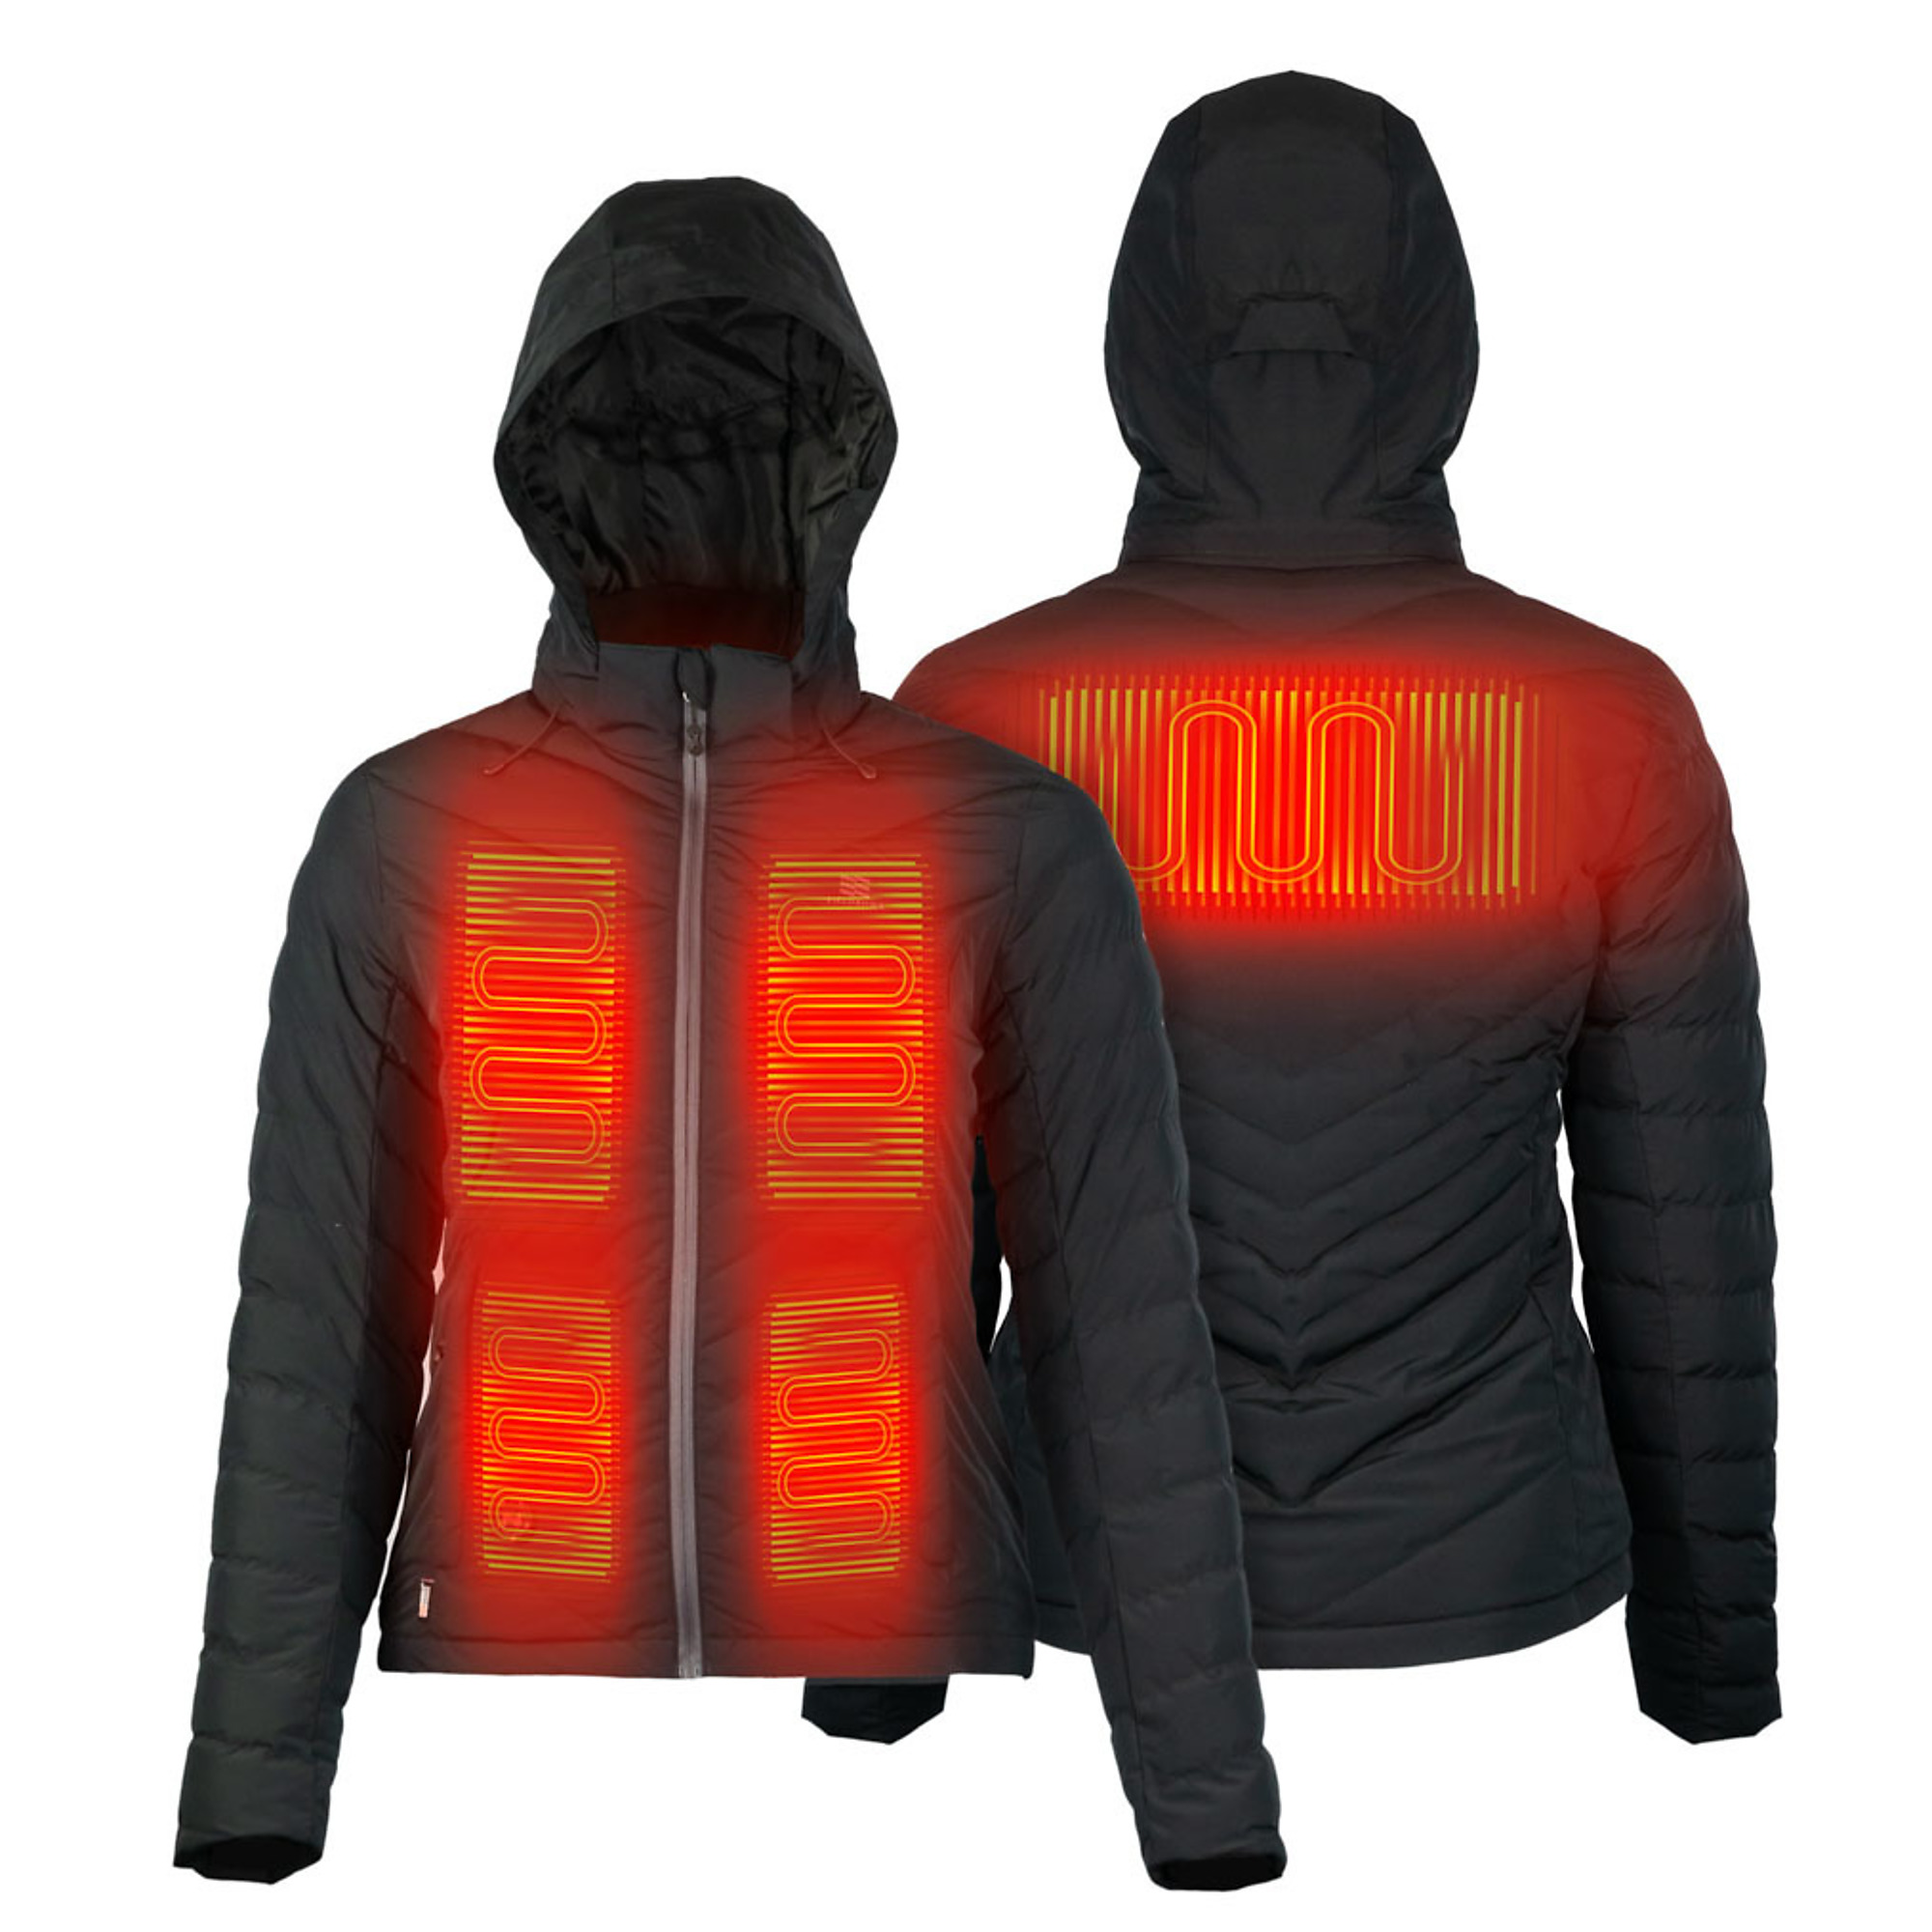 Fieldsheer, Women's Crest Heated Jacket with 7.4v Battery, Size 2XL, Color Black, Model MWWJ39010622